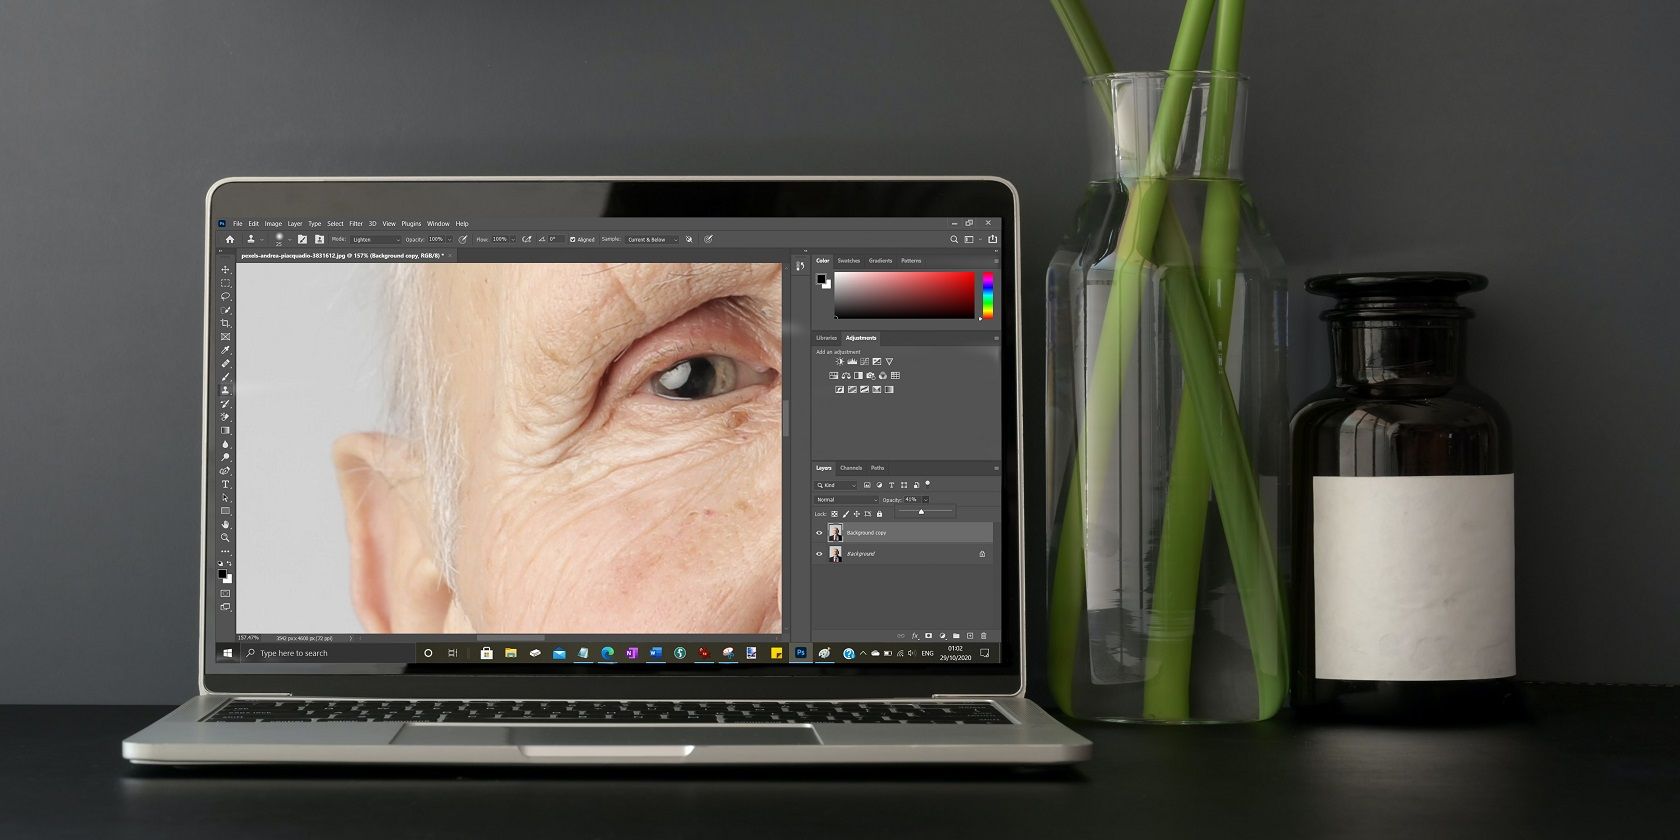 Photoshop image editing on a laptop